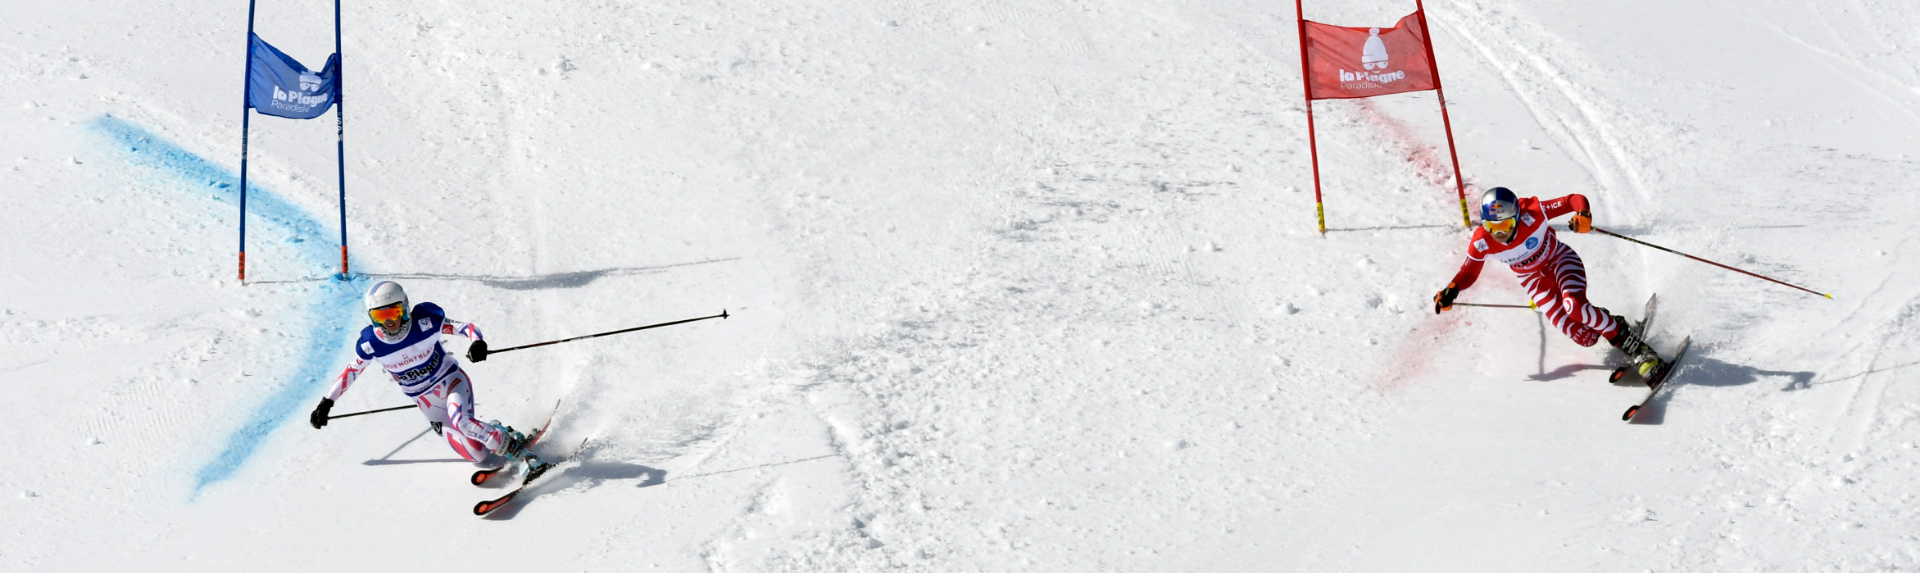 Telemark sur le stade de slalom de La Plagne